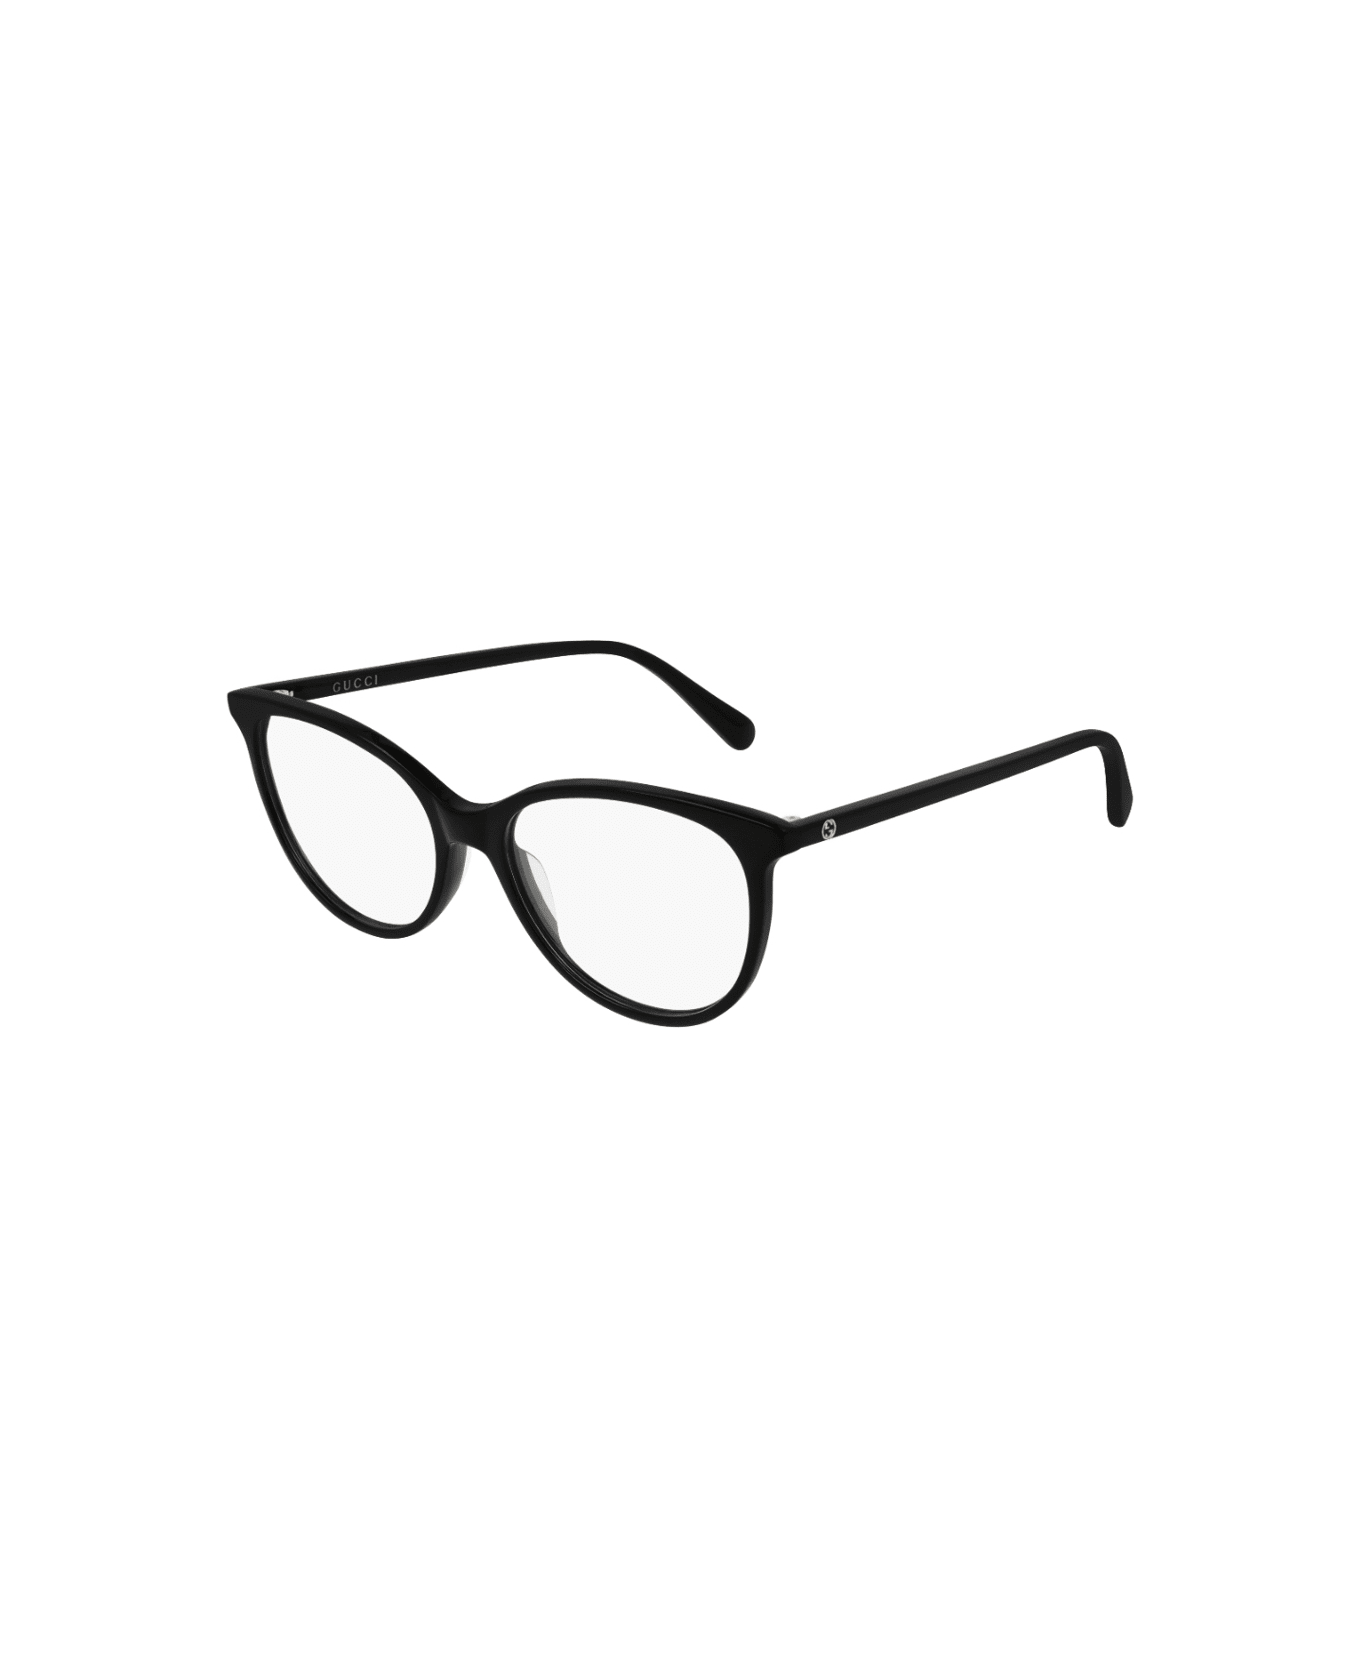 Gucci Eyewear GG0550o 001 Glasses - Black